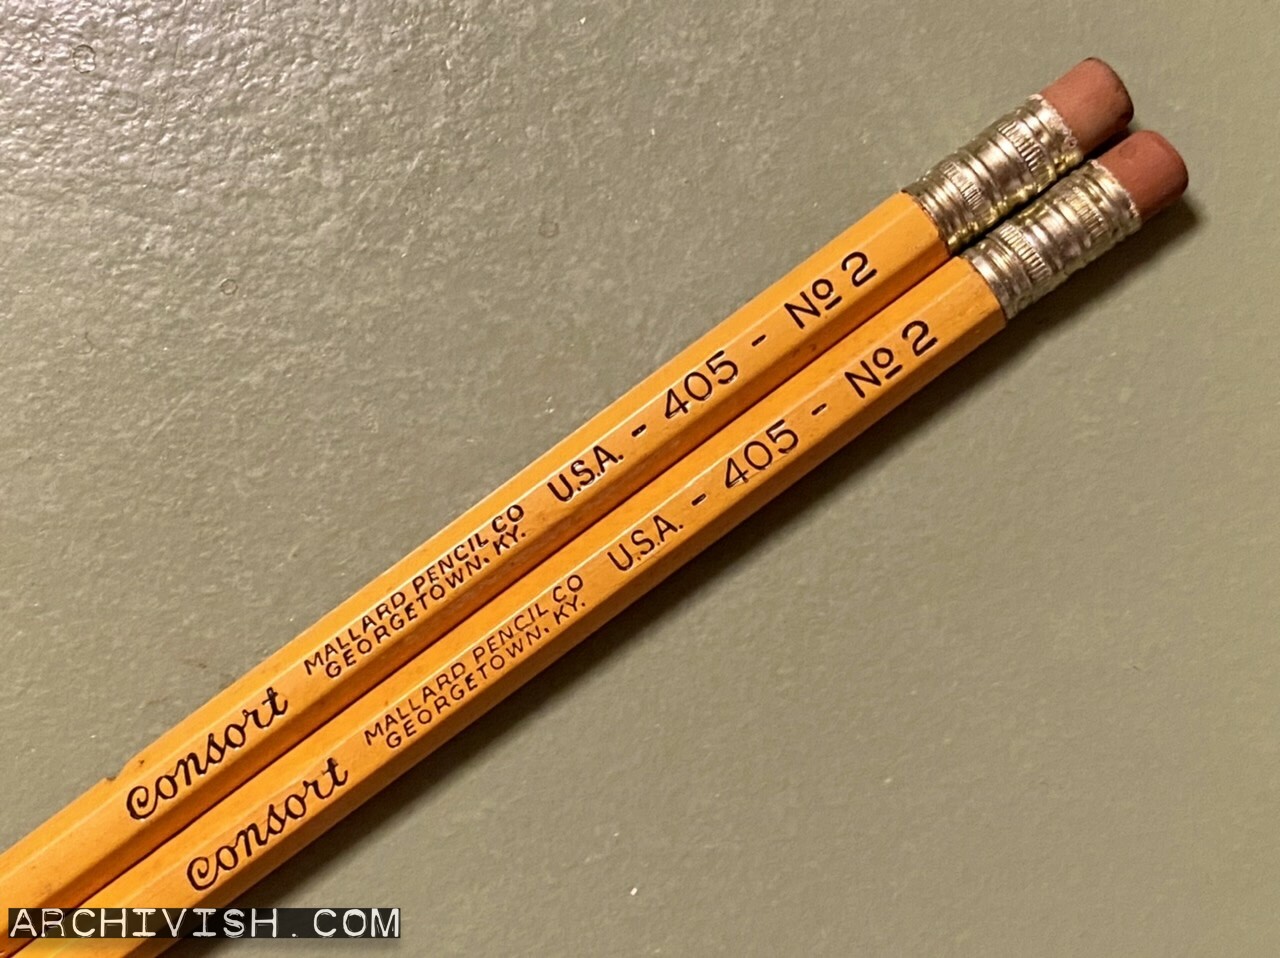 Mallard Pencil Company Georgetown, Kentucky, USA - 405 No. 2